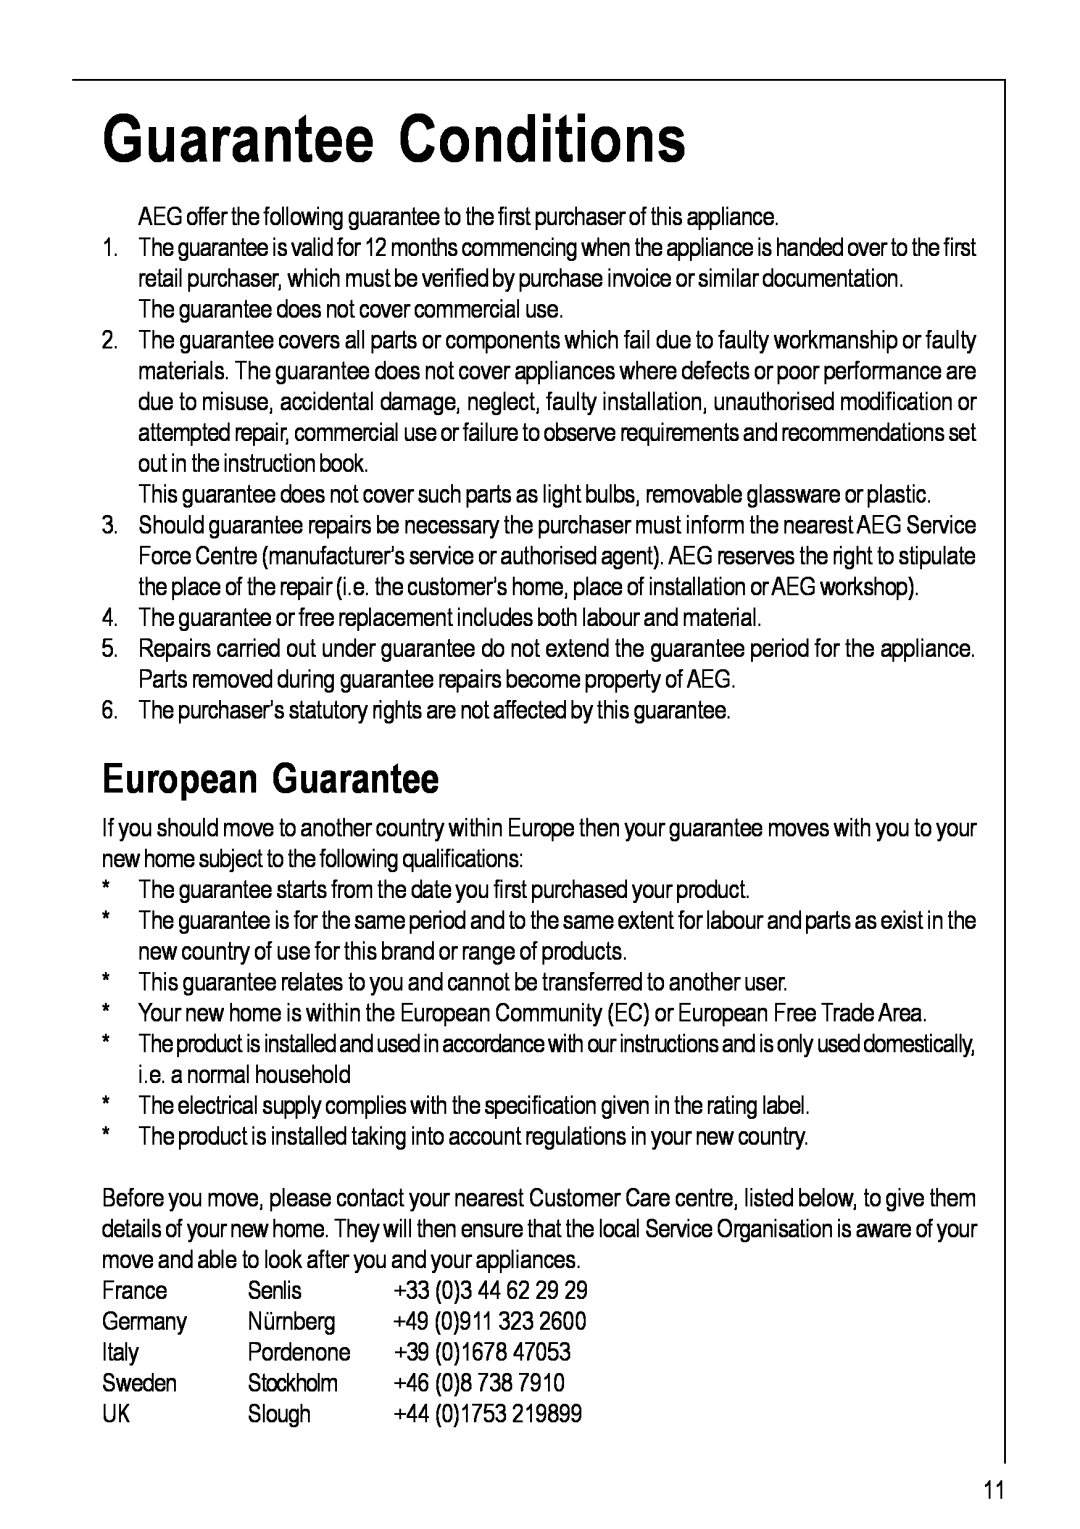 Electrolux 111 K operating instructions Guarantee Conditions, European Guarantee 